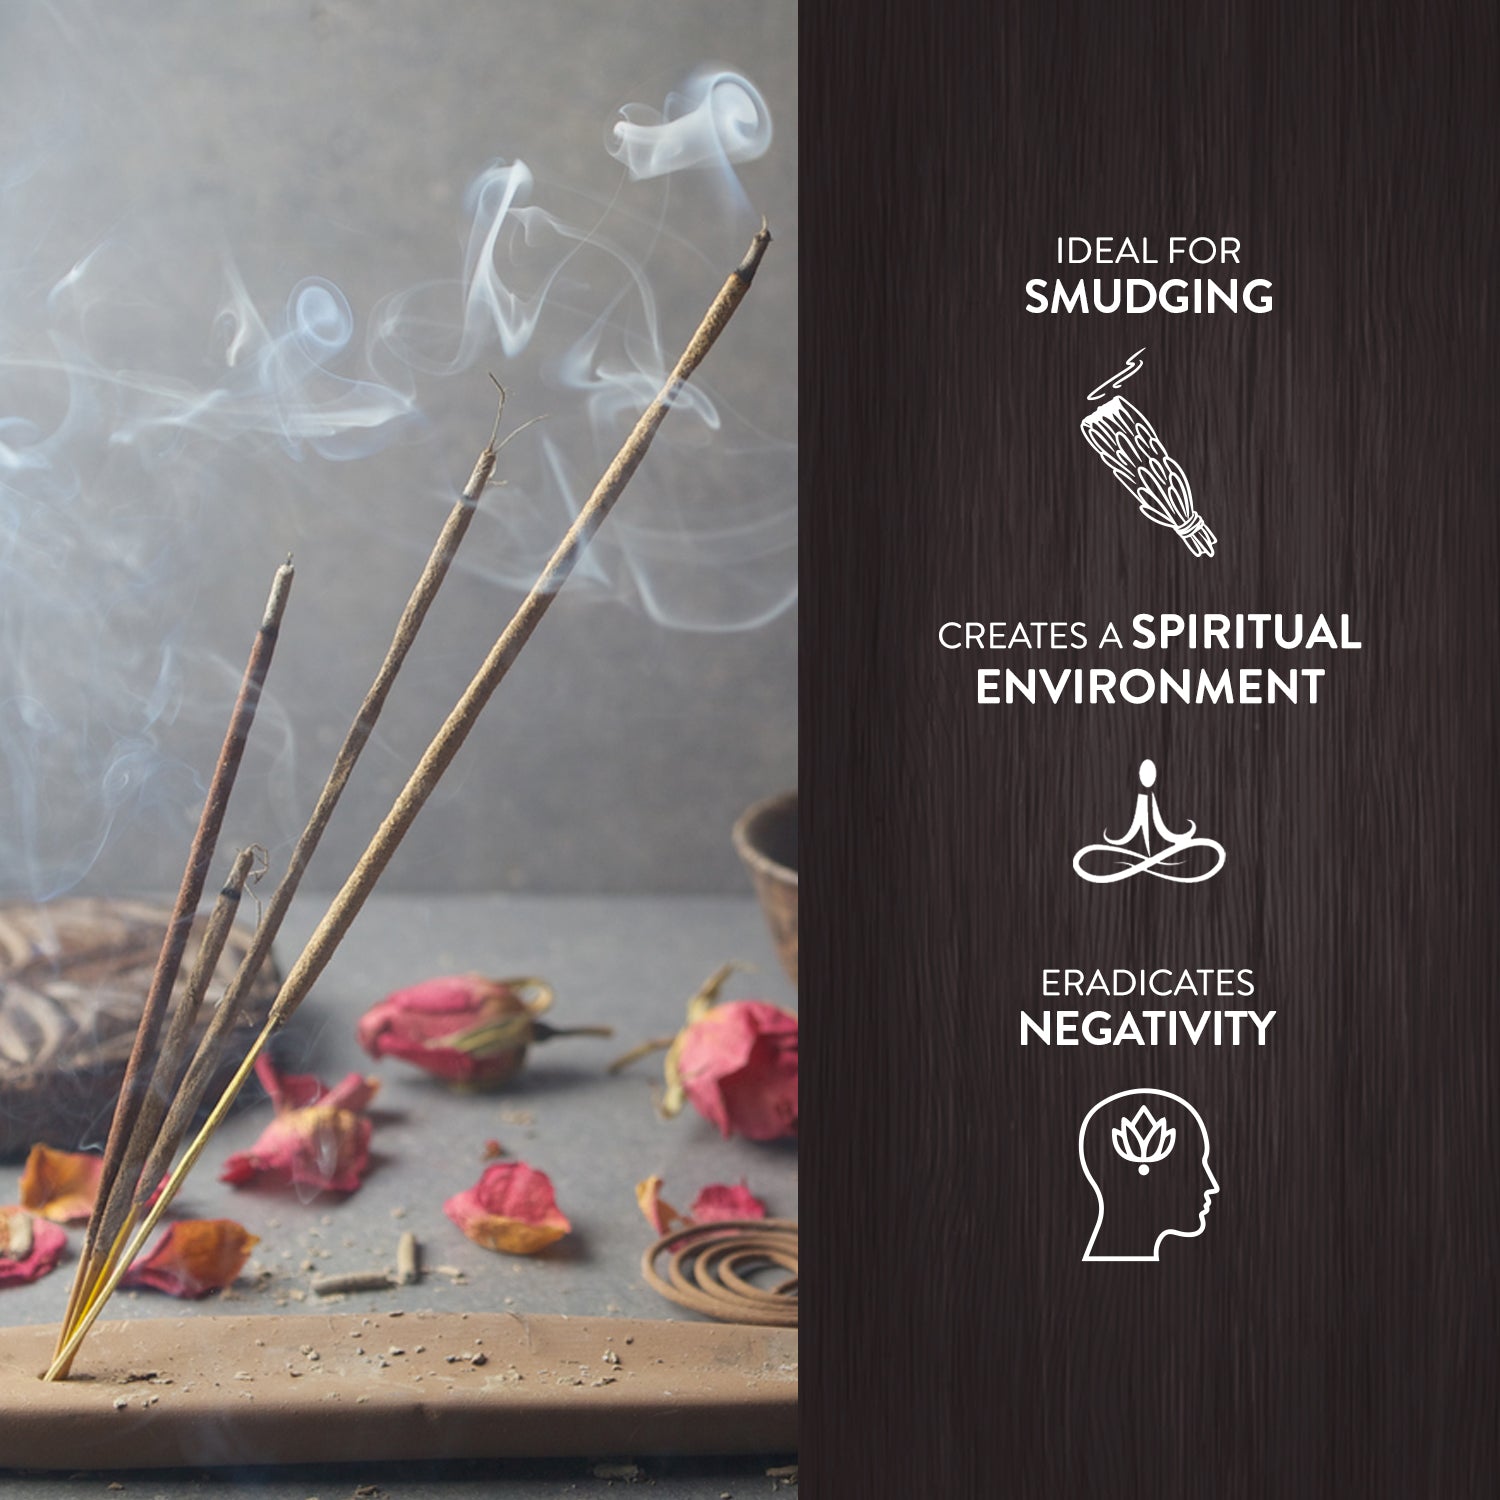 hem-smudging-indulgence-masala-incense-stick-kit-usage